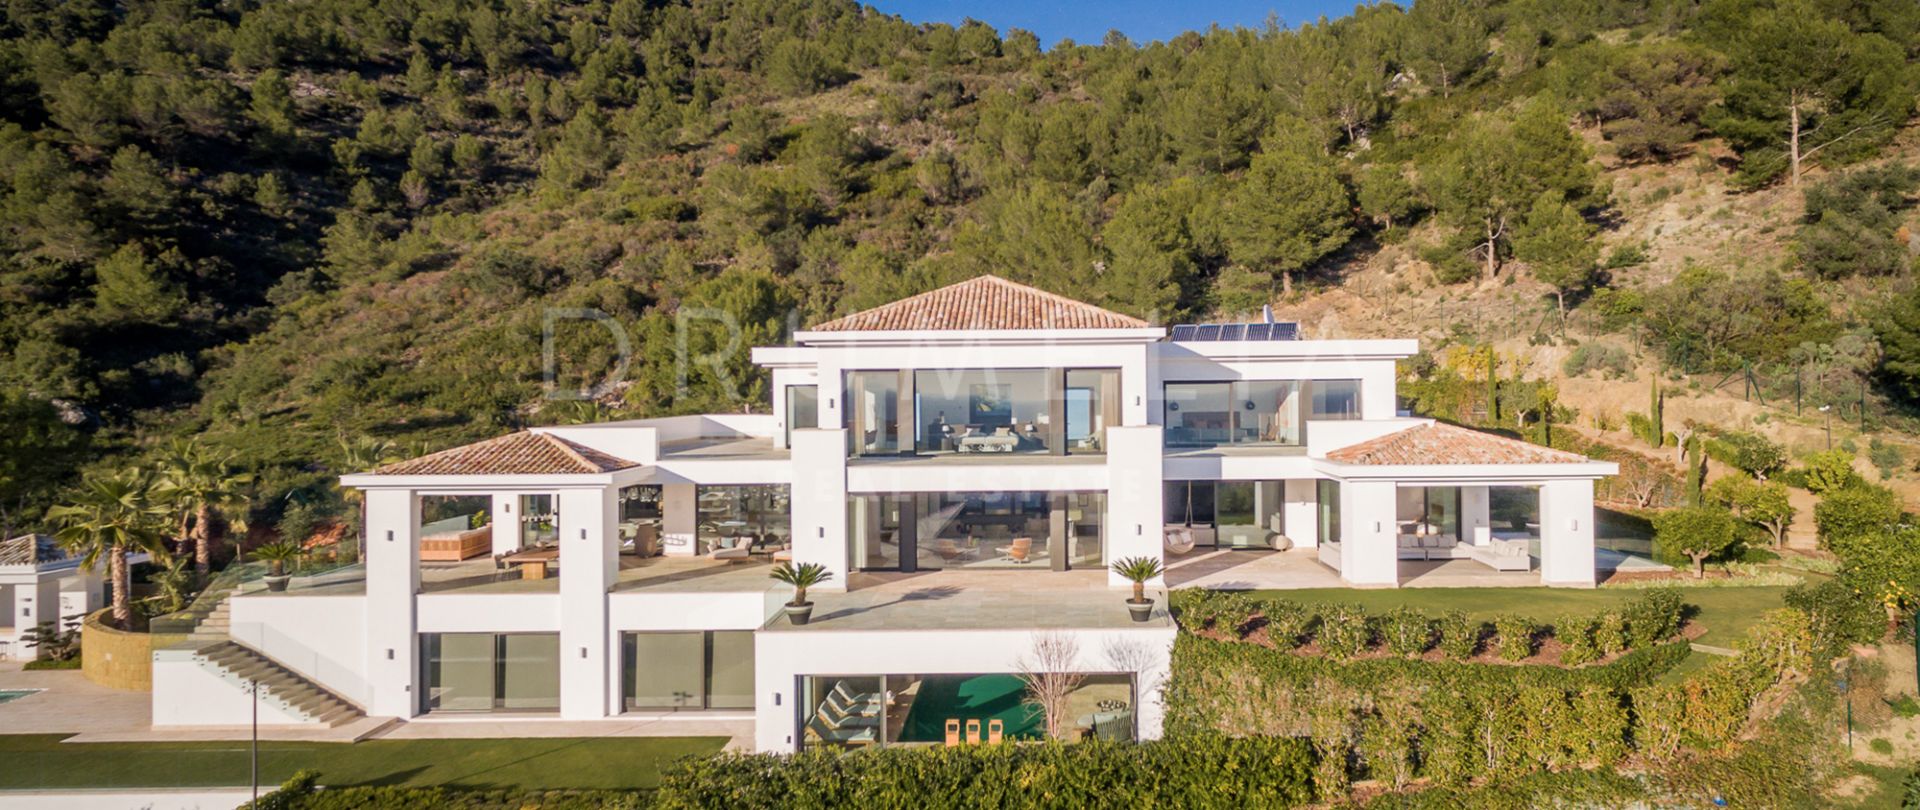 Villa for salg i Cascada de Camojan, Marbella Golden Mile